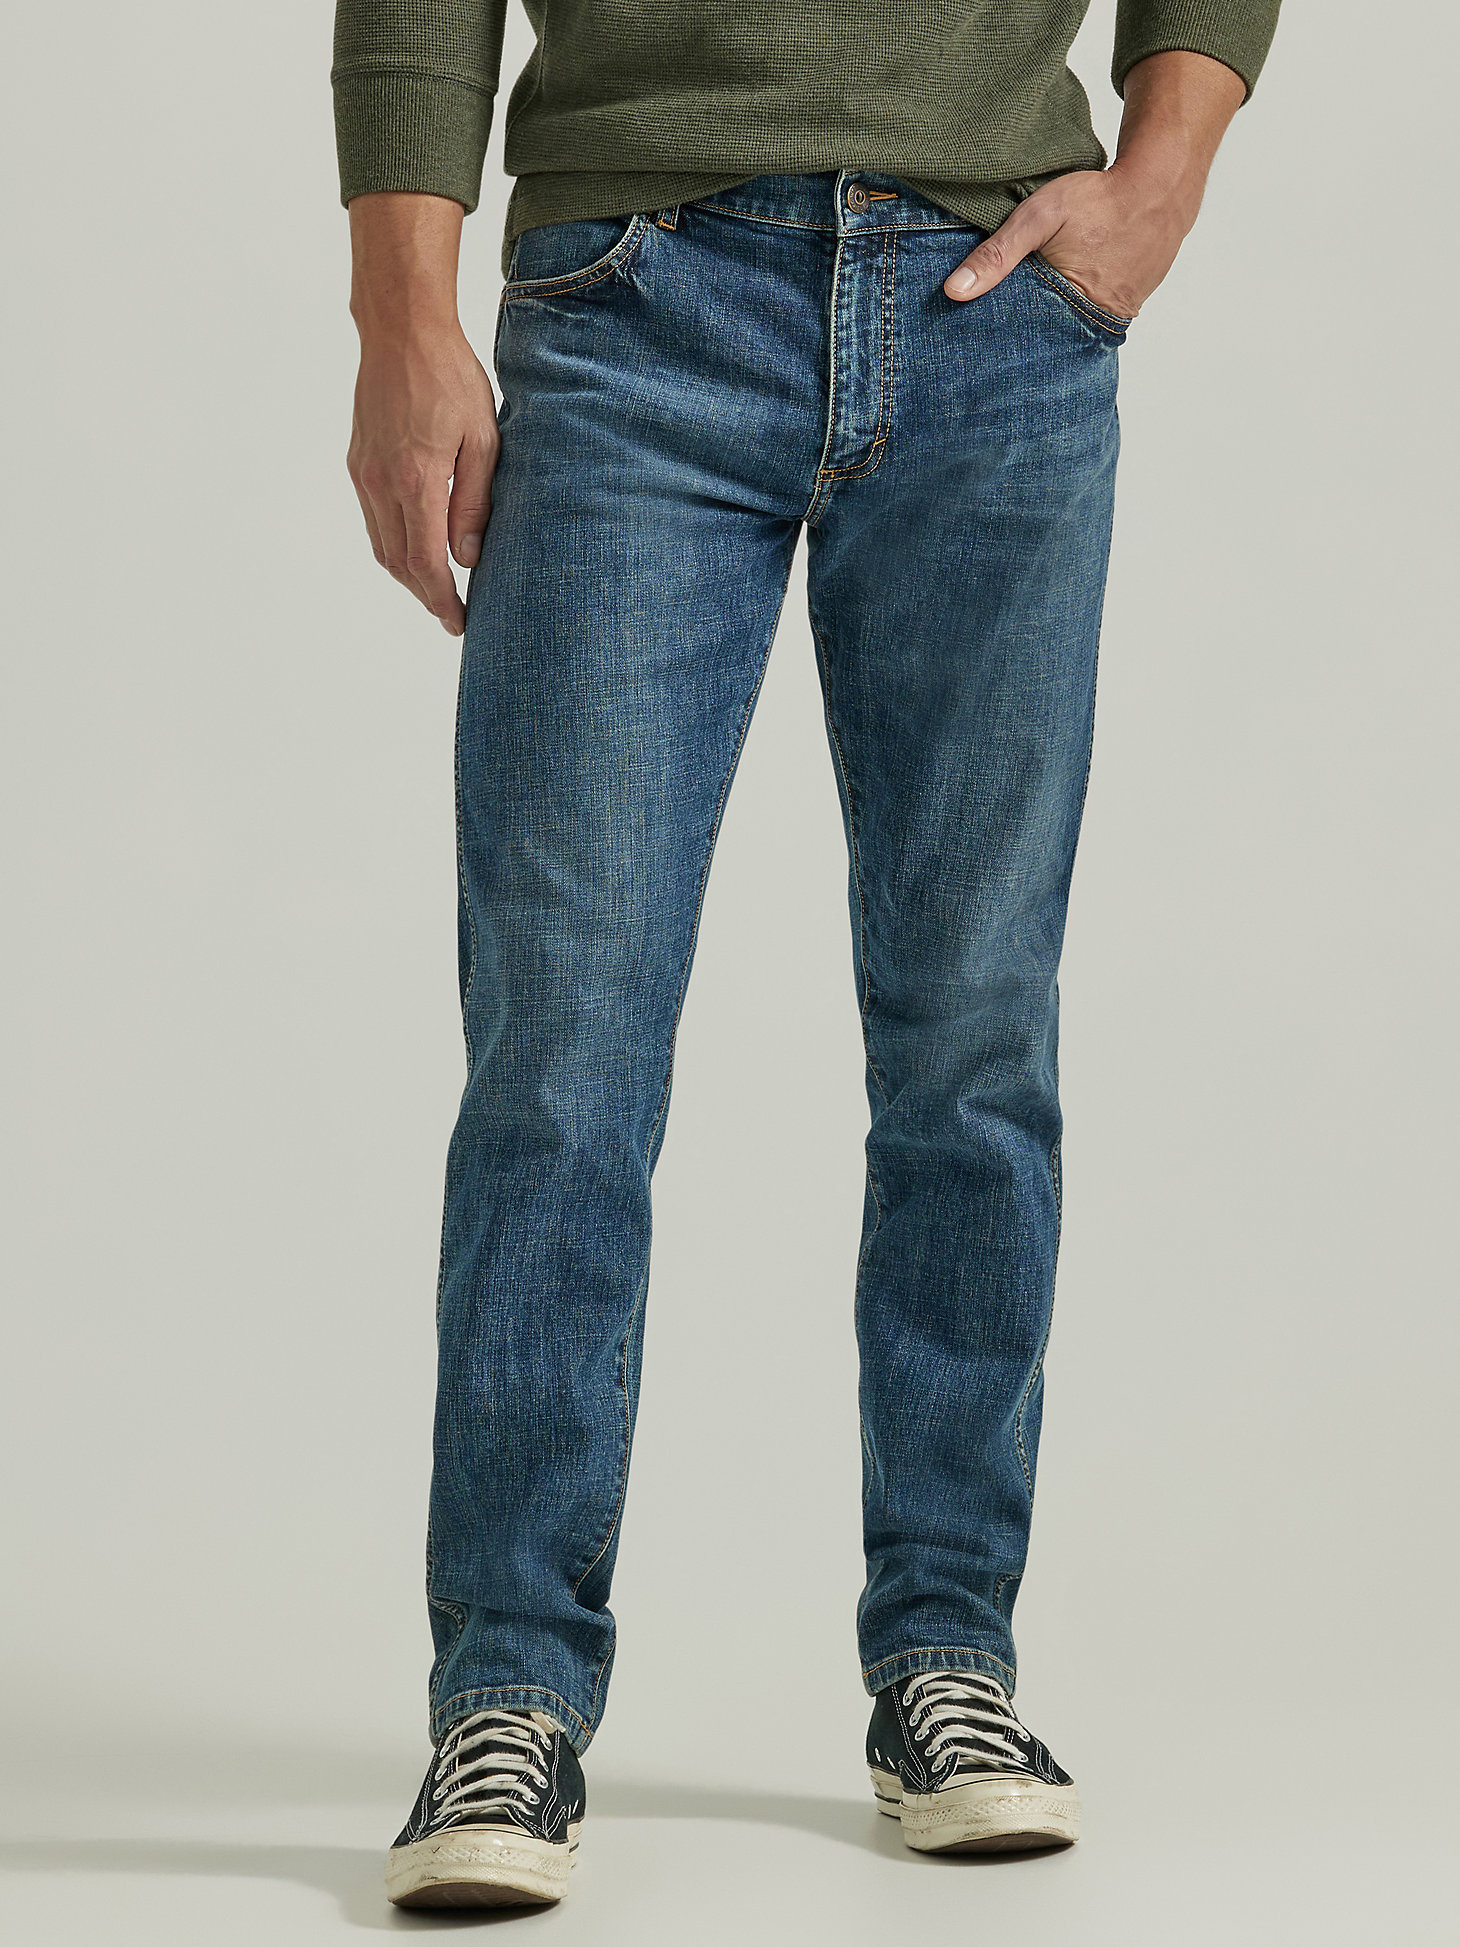 Men's Tapered Regular Fit Jean in Medium Wash alternative view 1